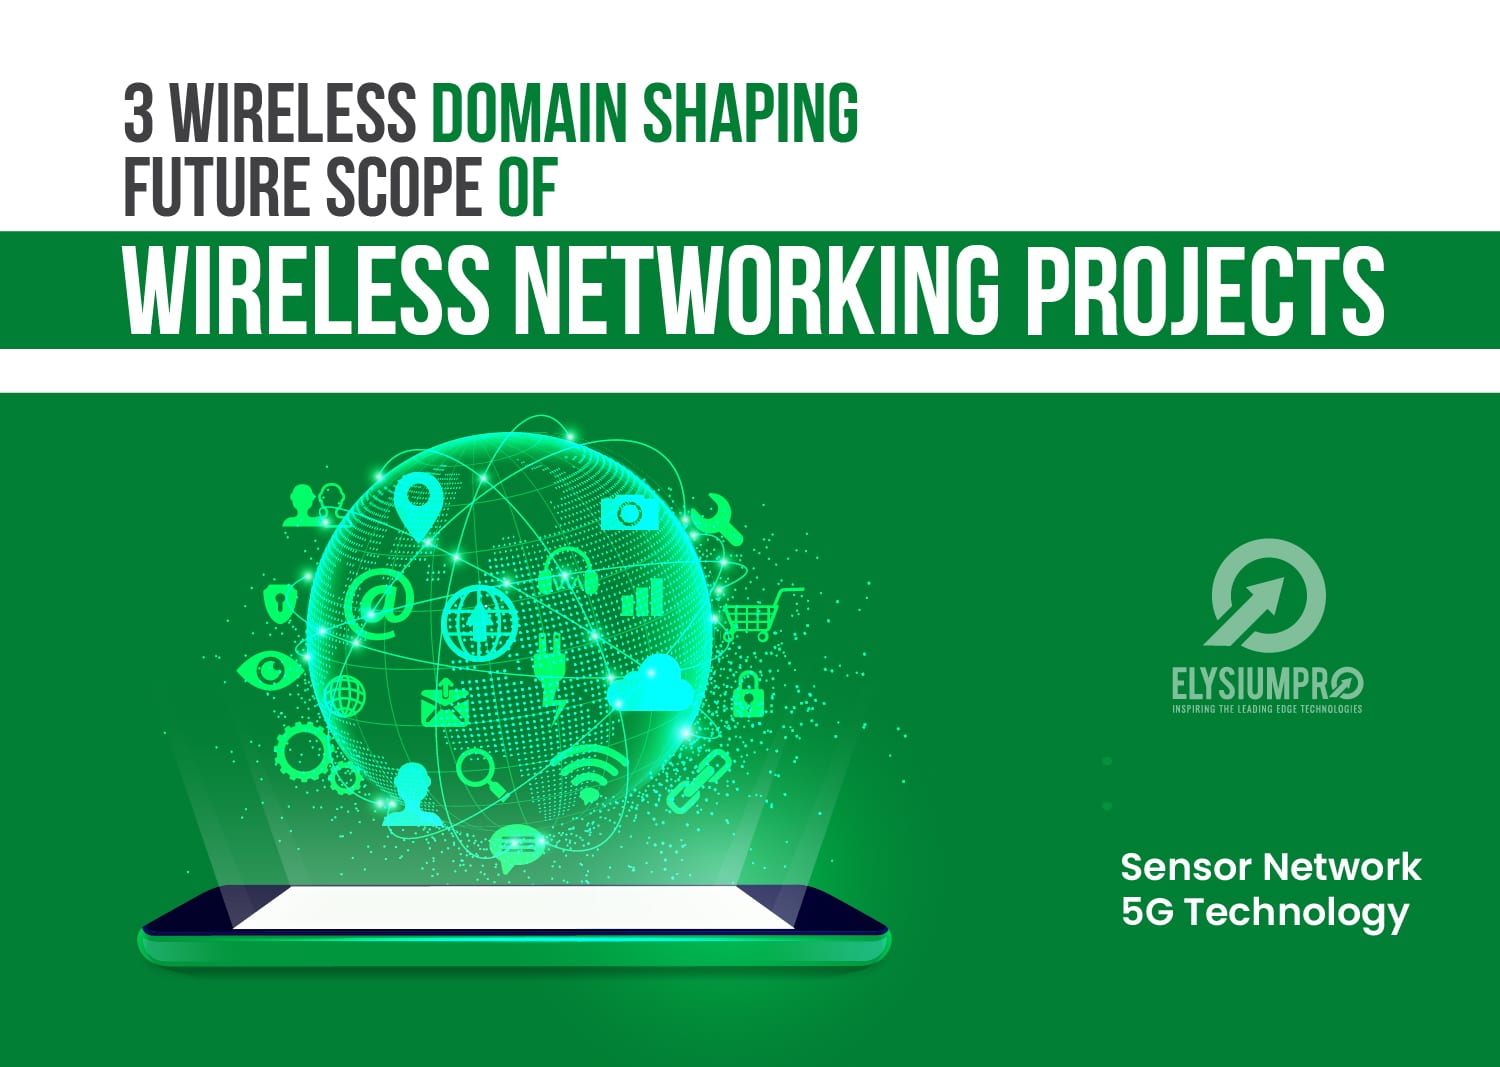 3 Wireless Domain Future Scope Wireless Networking Projects